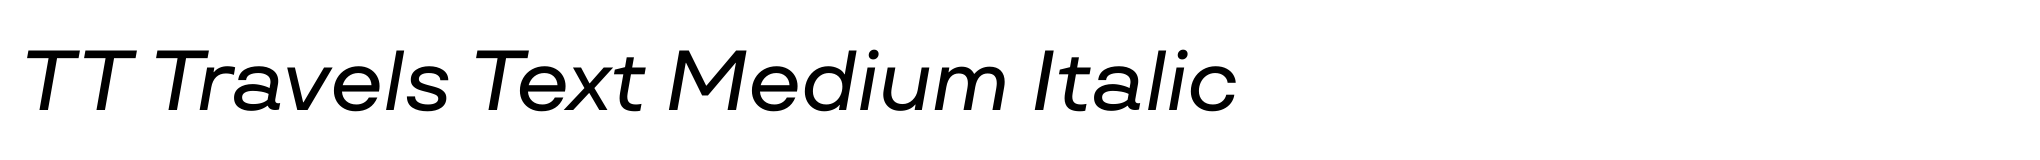 TT Travels Text Medium Italic image